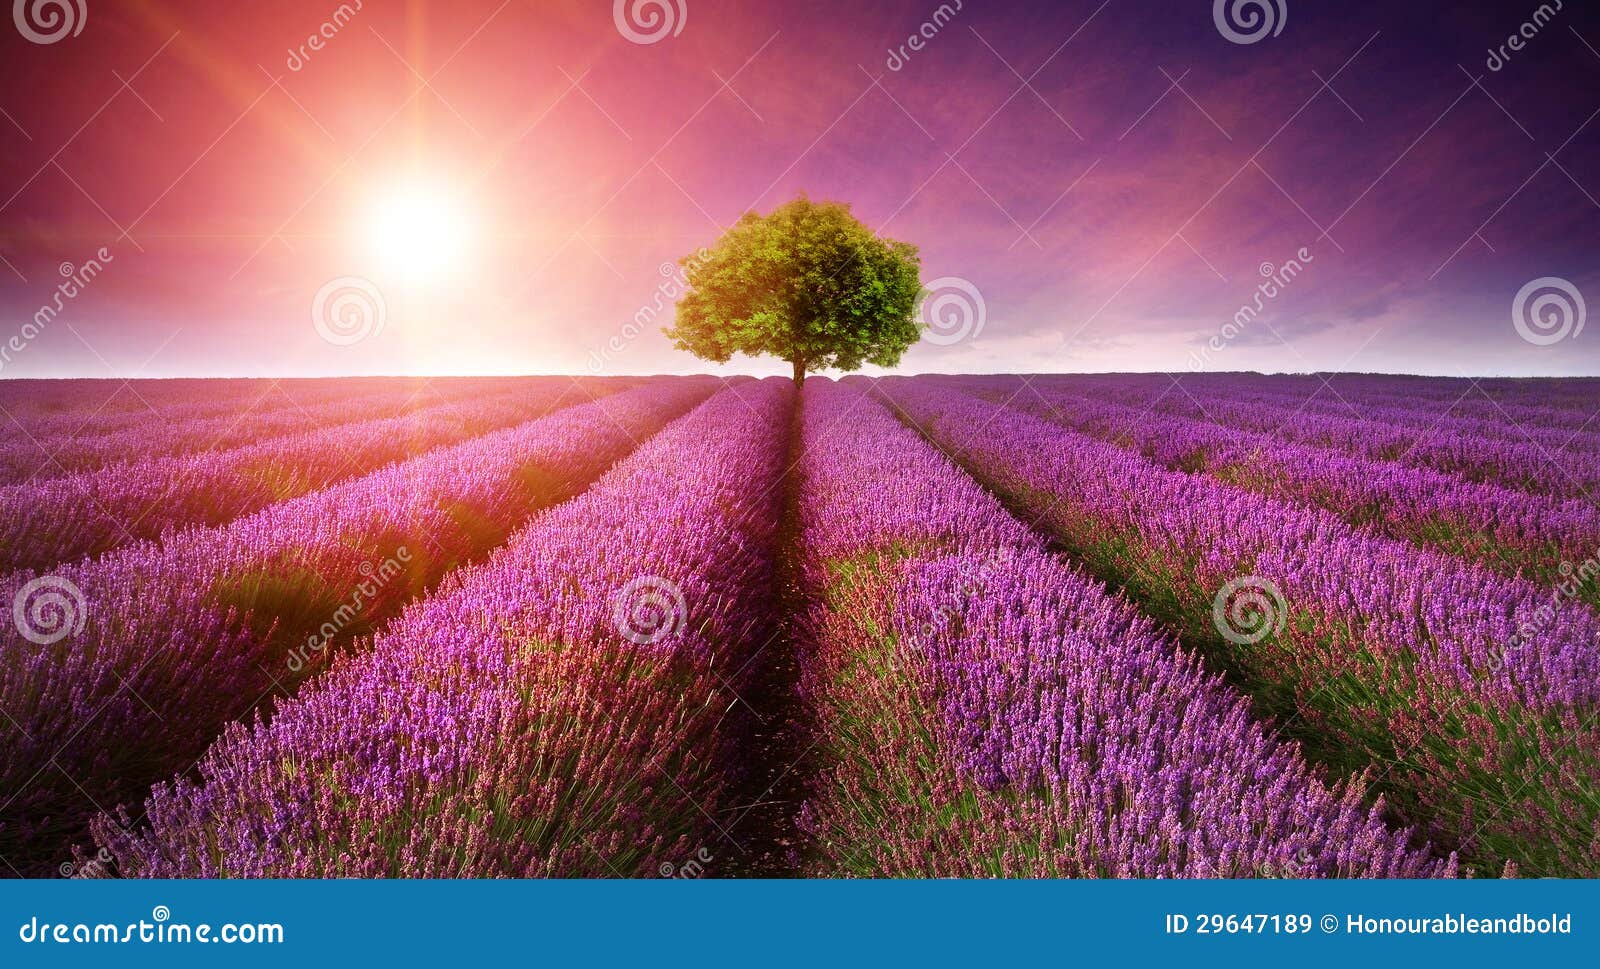 stunning lavender field landscape summer sunset with single tree